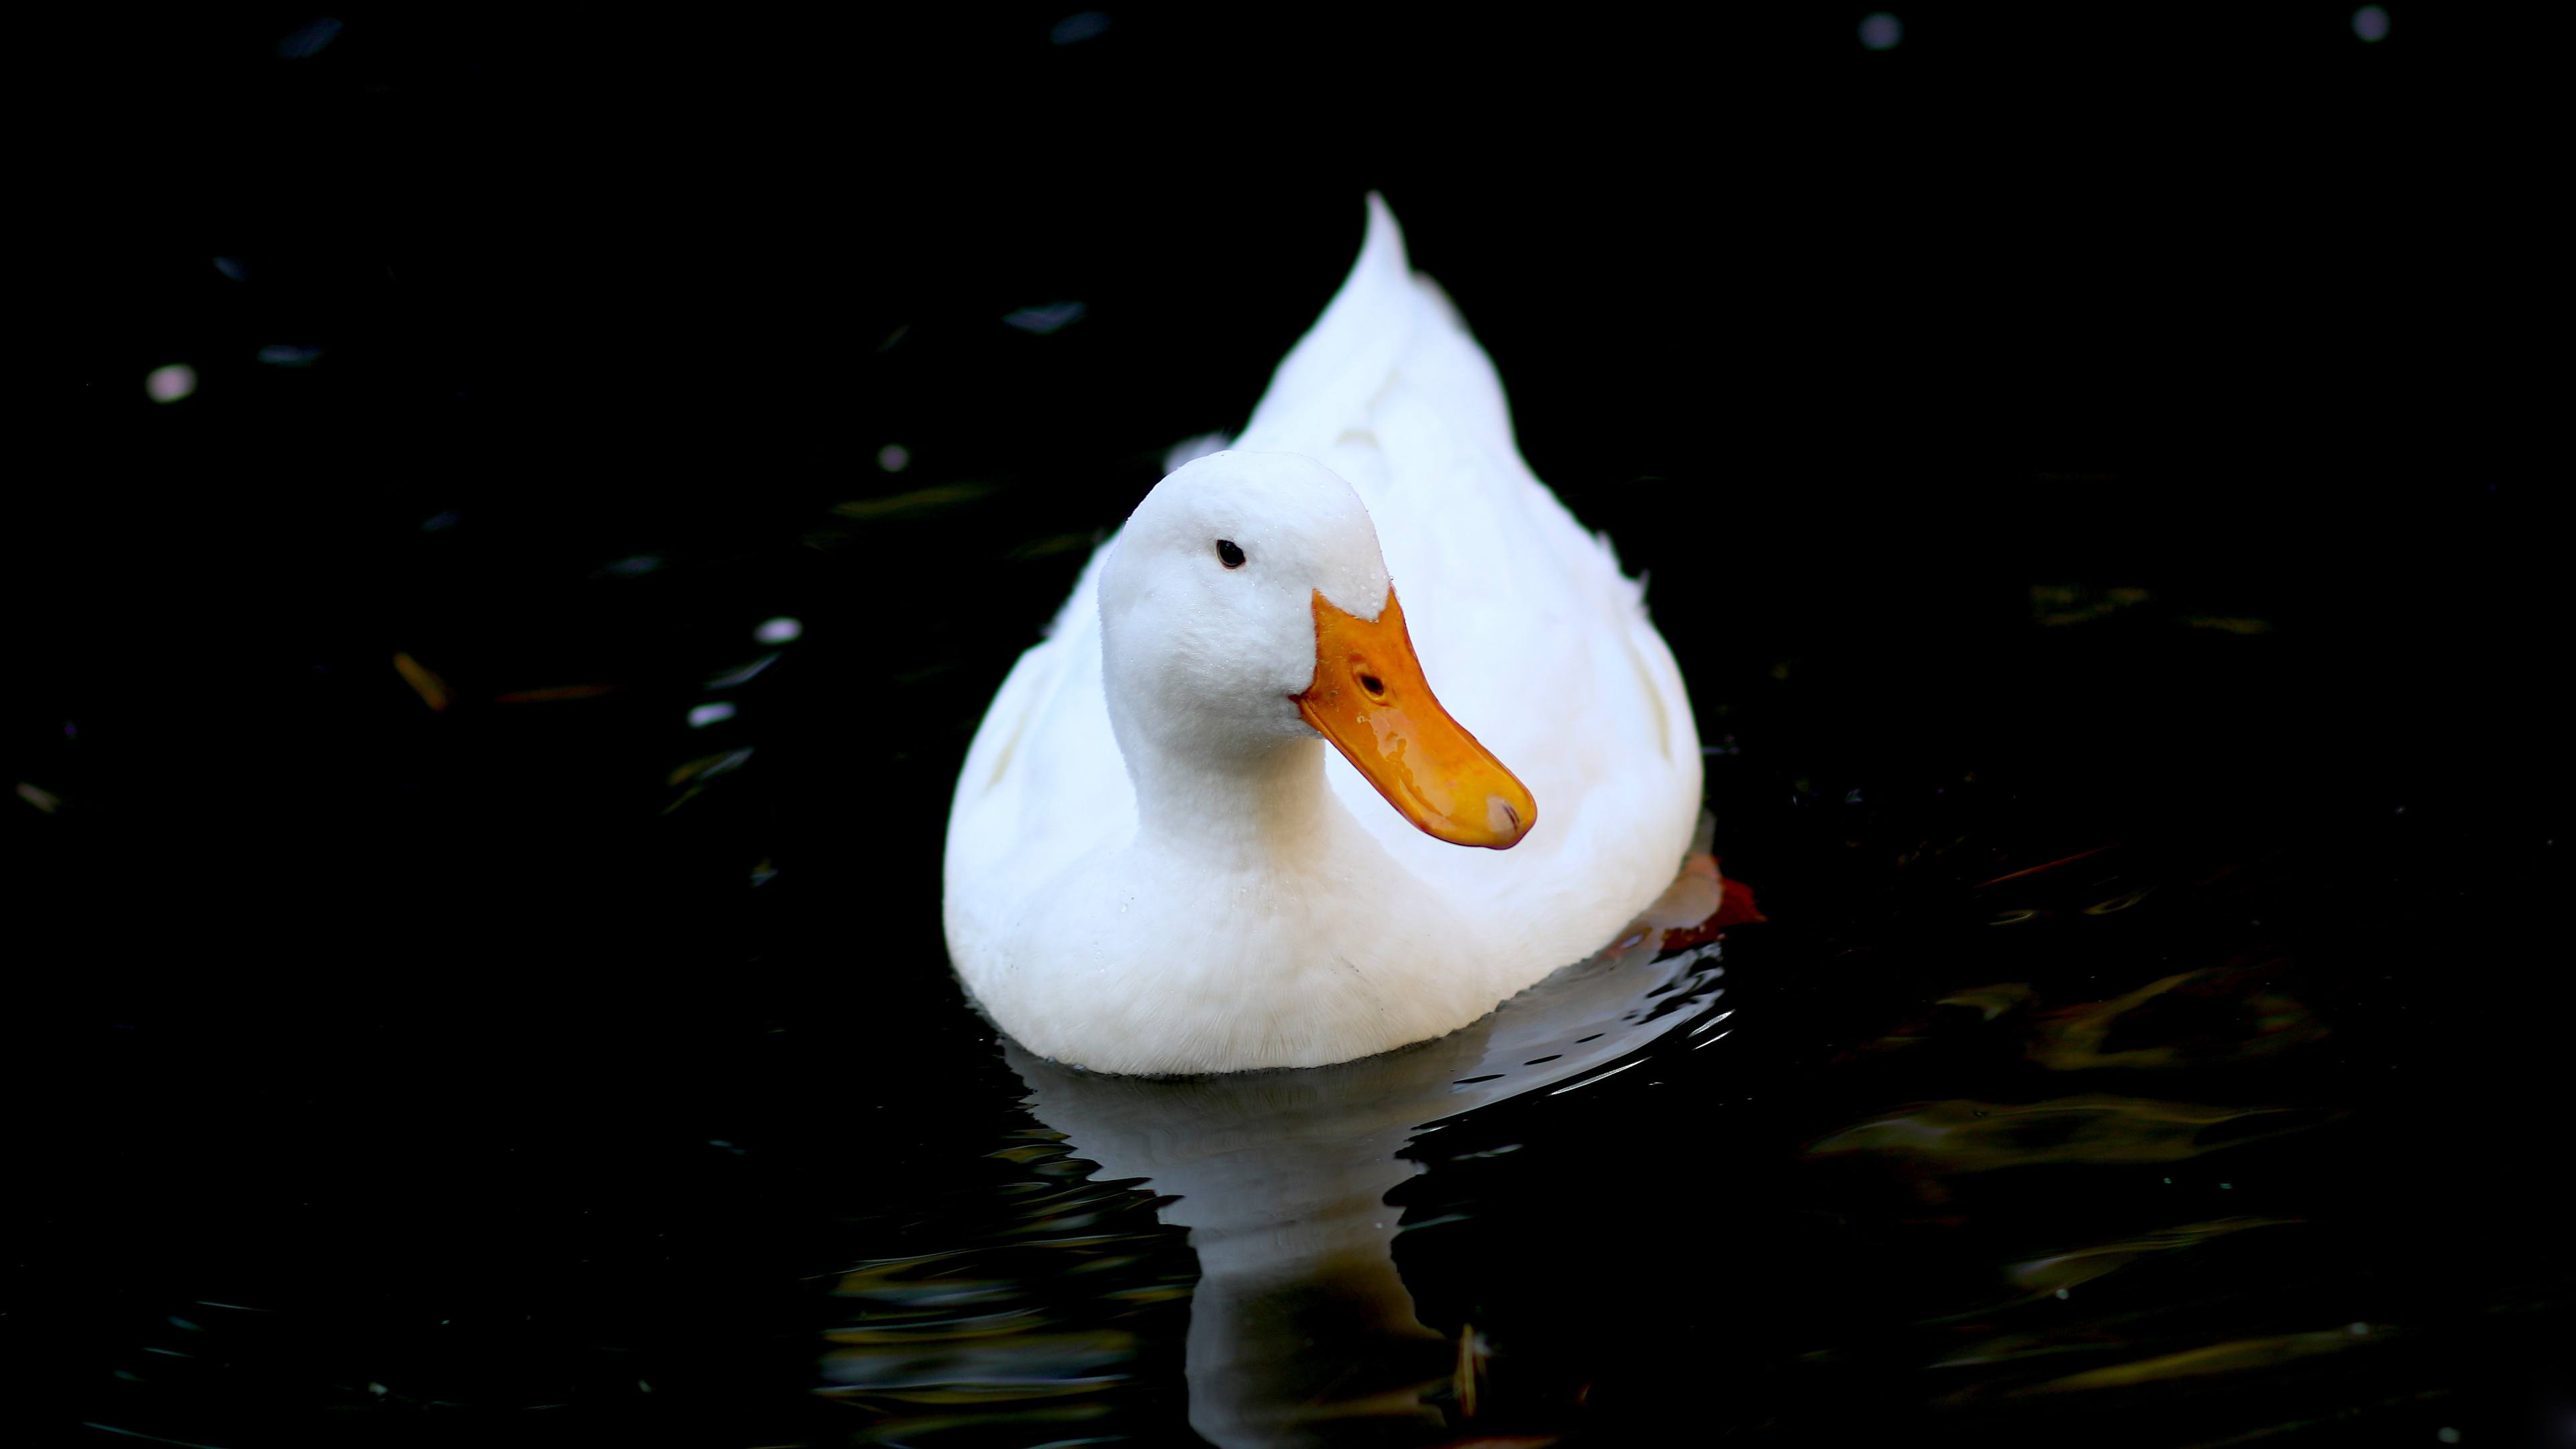 White duck swimming, 4K wallpaper, High definition image, Widescreen display, 3840x2160 4K Desktop